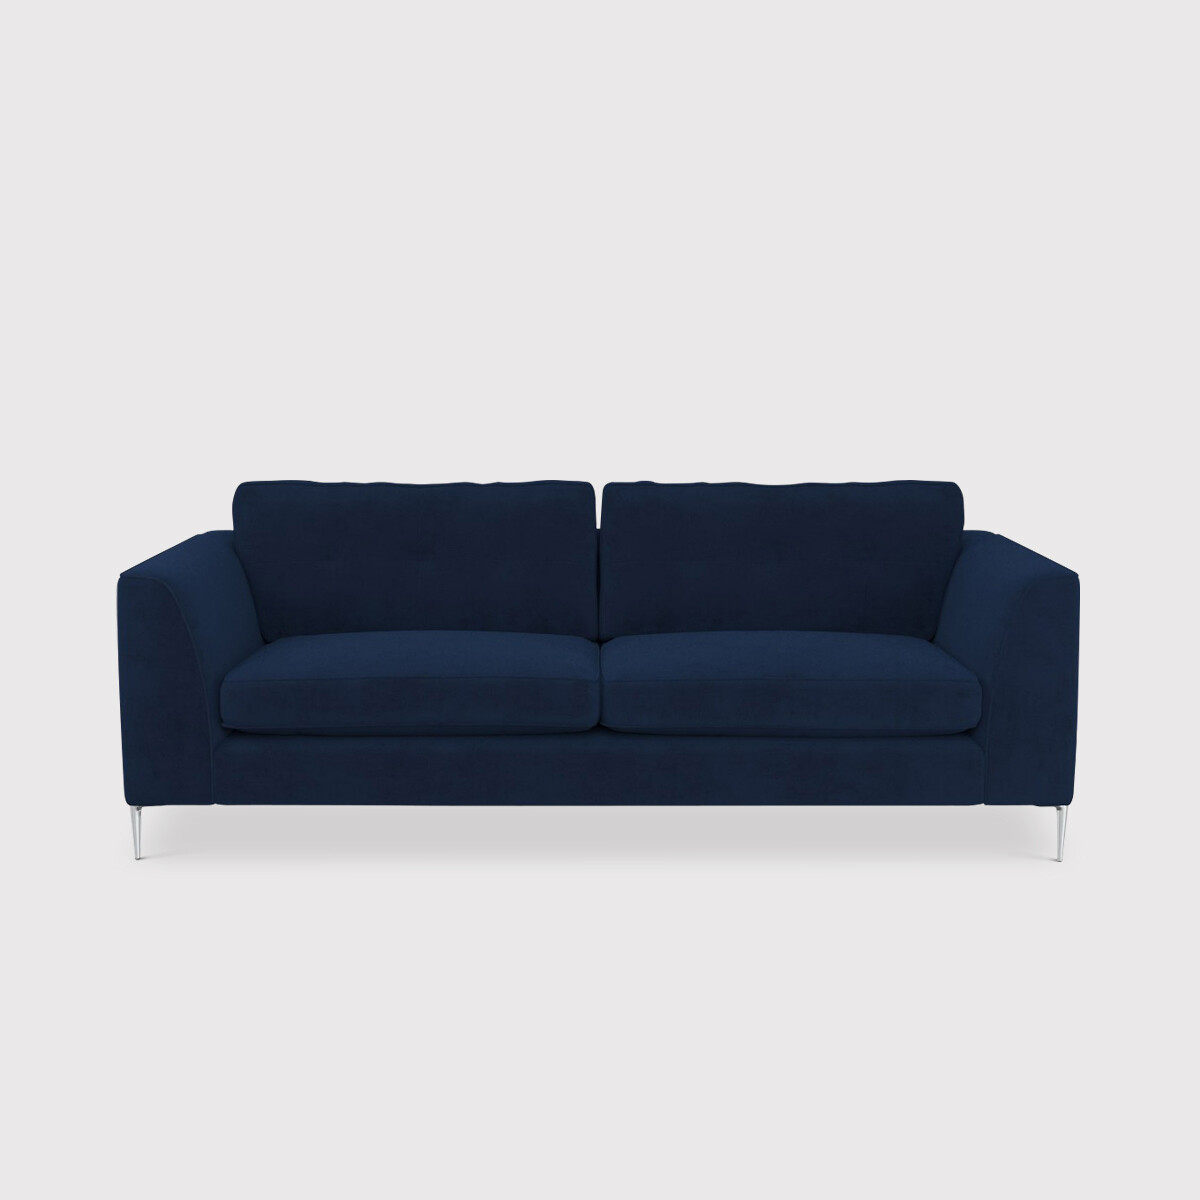 Conza Extra Large Sofa, Blue Fabric | Barker & Stonehouse